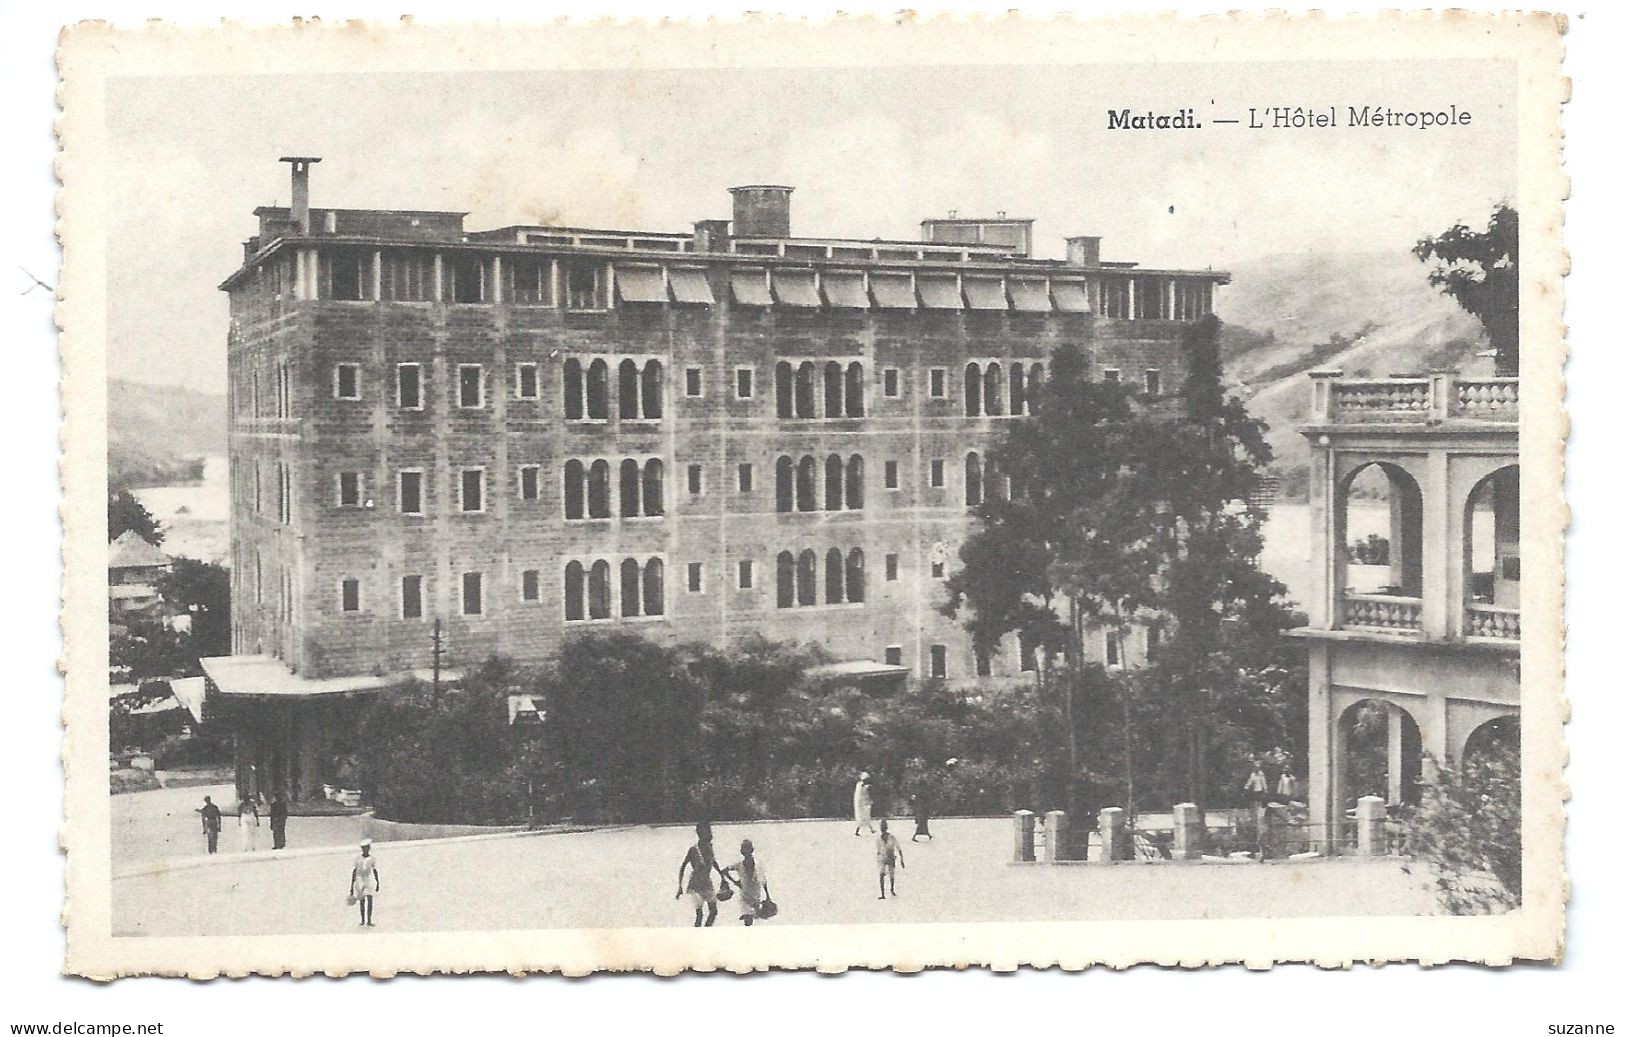 MATADI - L'Hôtel Métropole - CONGO BELGE - éd. S. BEST - Kinshasa - Leopoldville (Leopoldstadt)